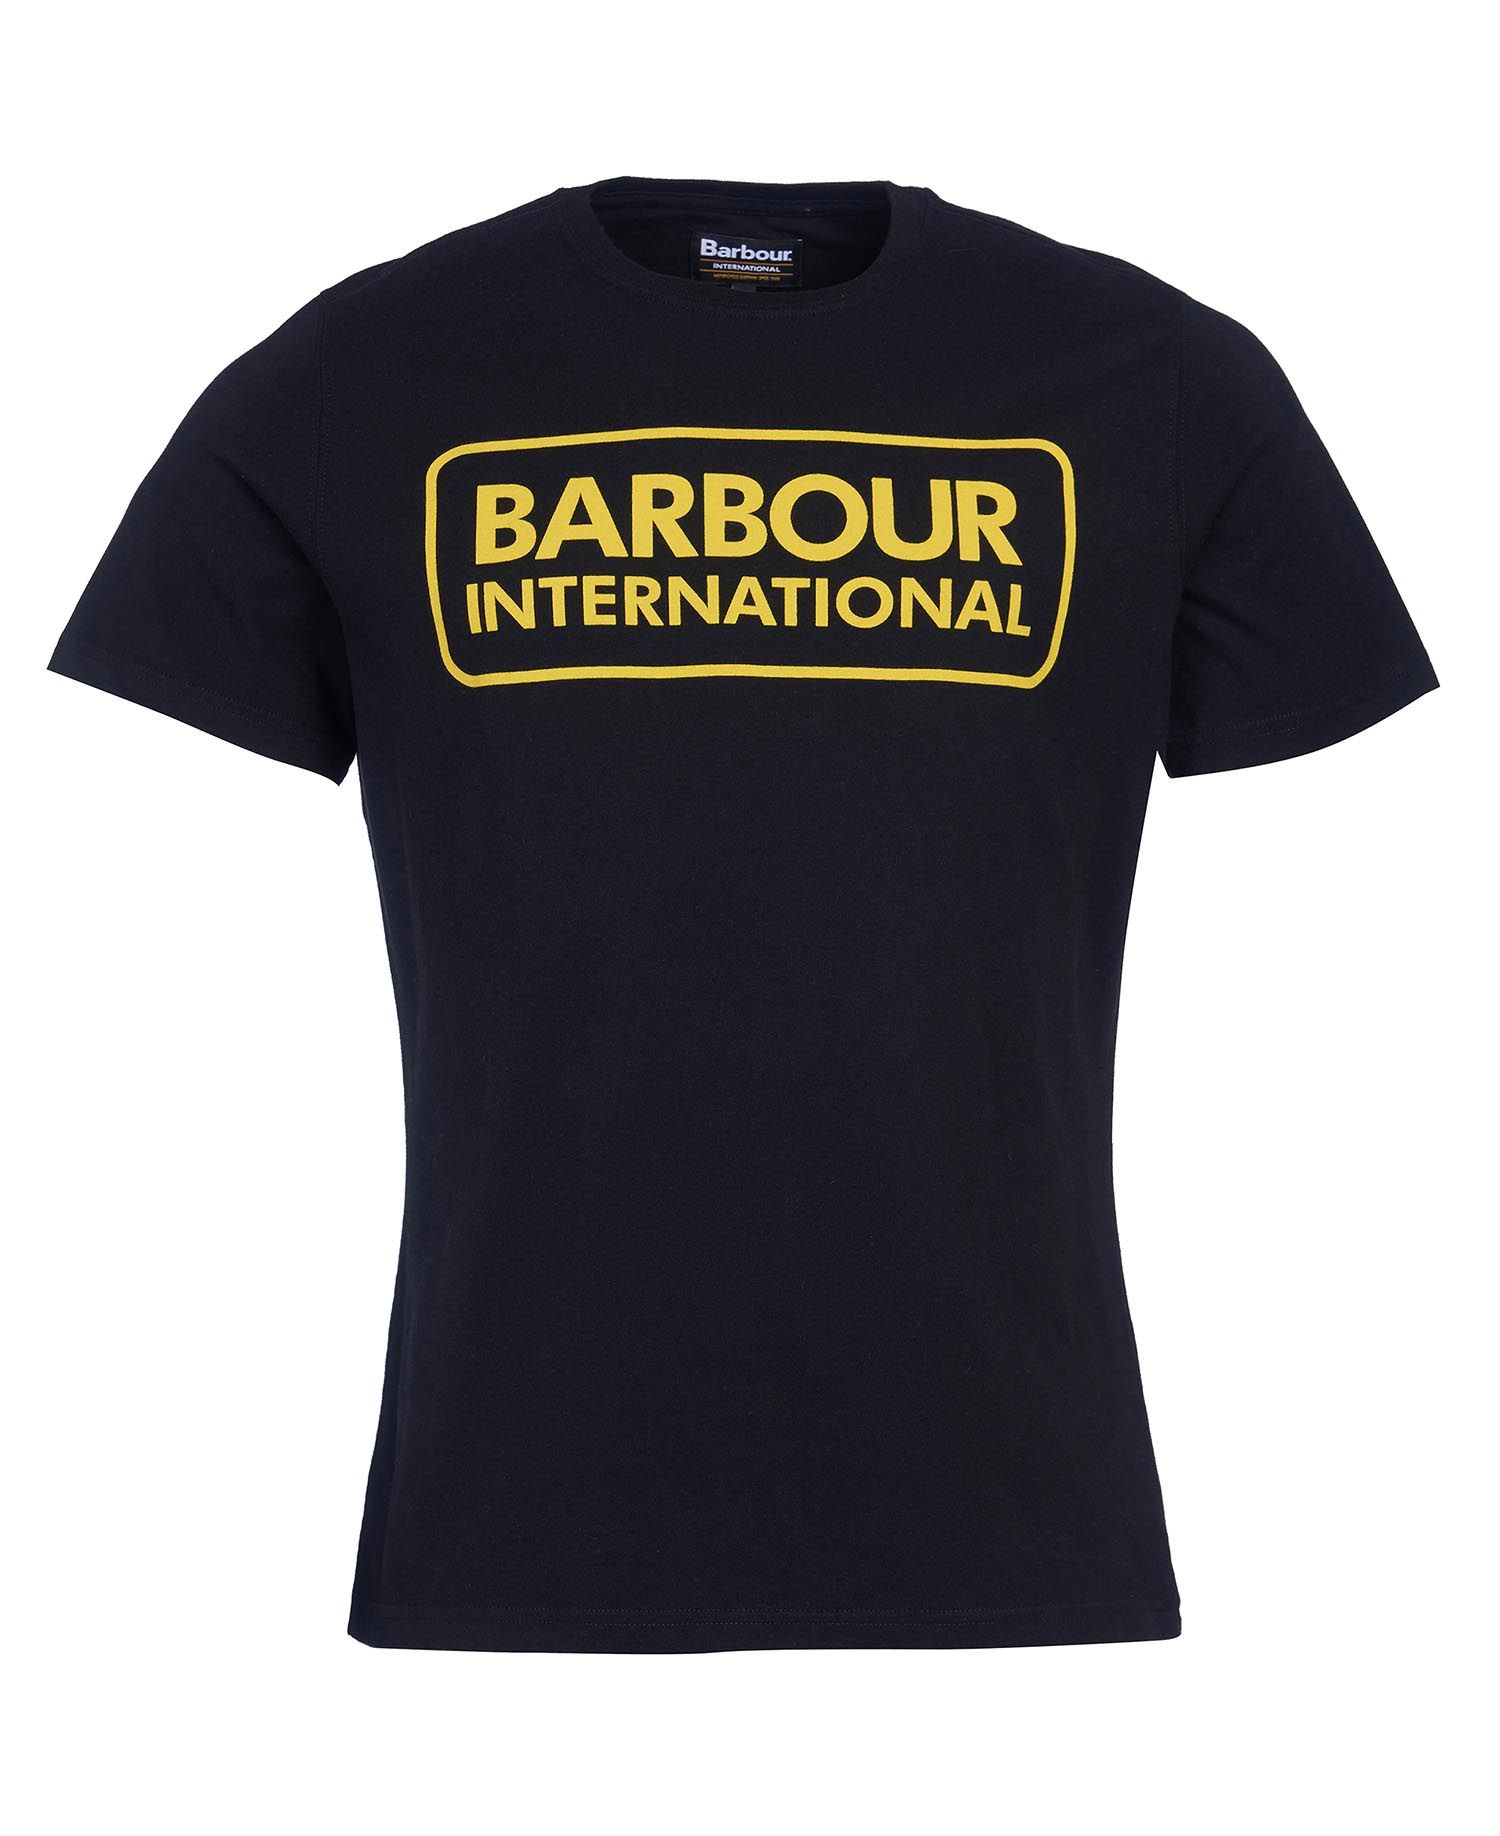 Barbour Barbour International Essential Large Logo T-shirt Black Yellow